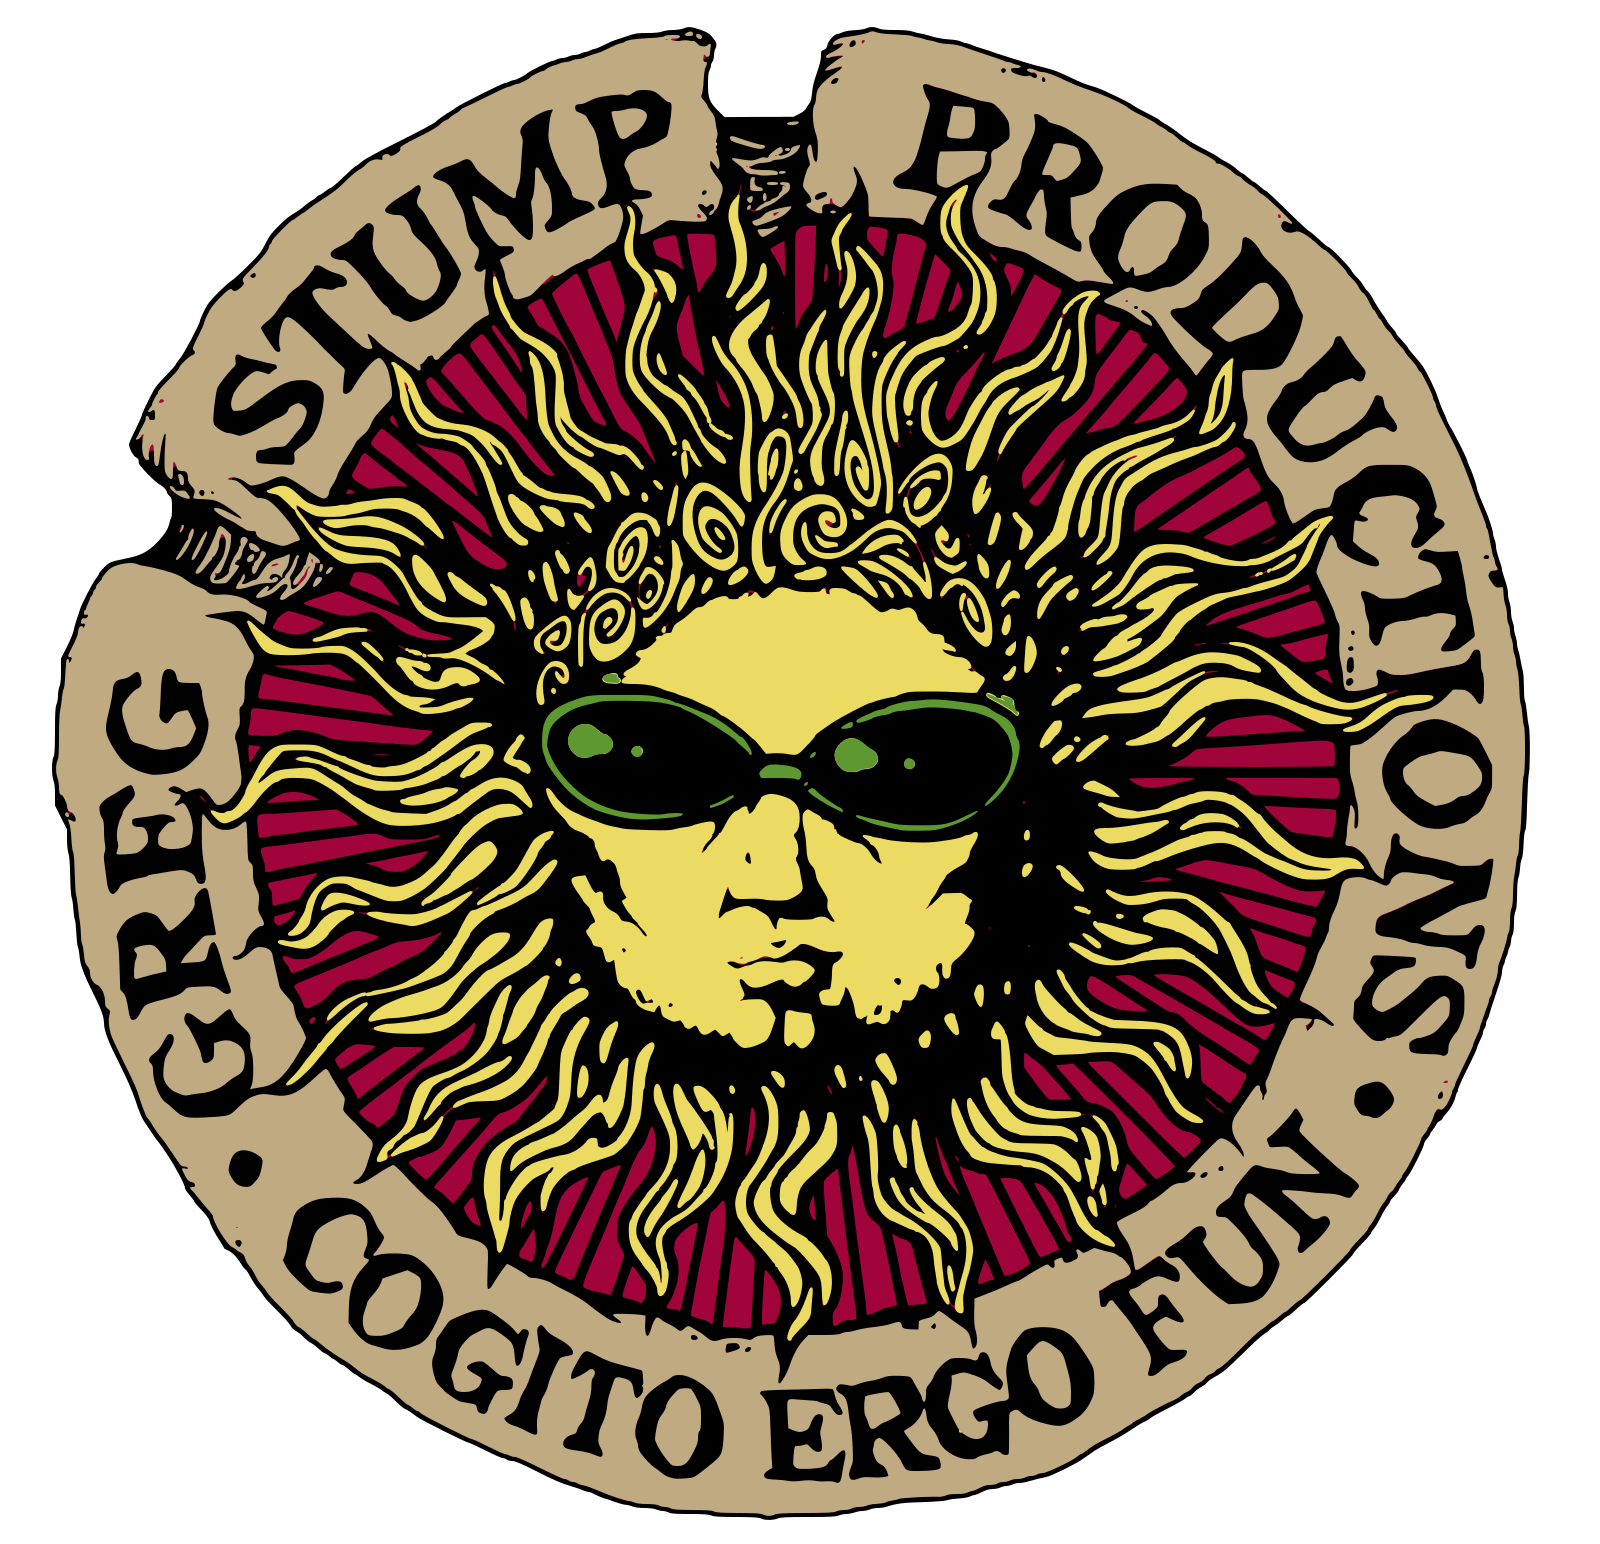 Greg Stump Productions